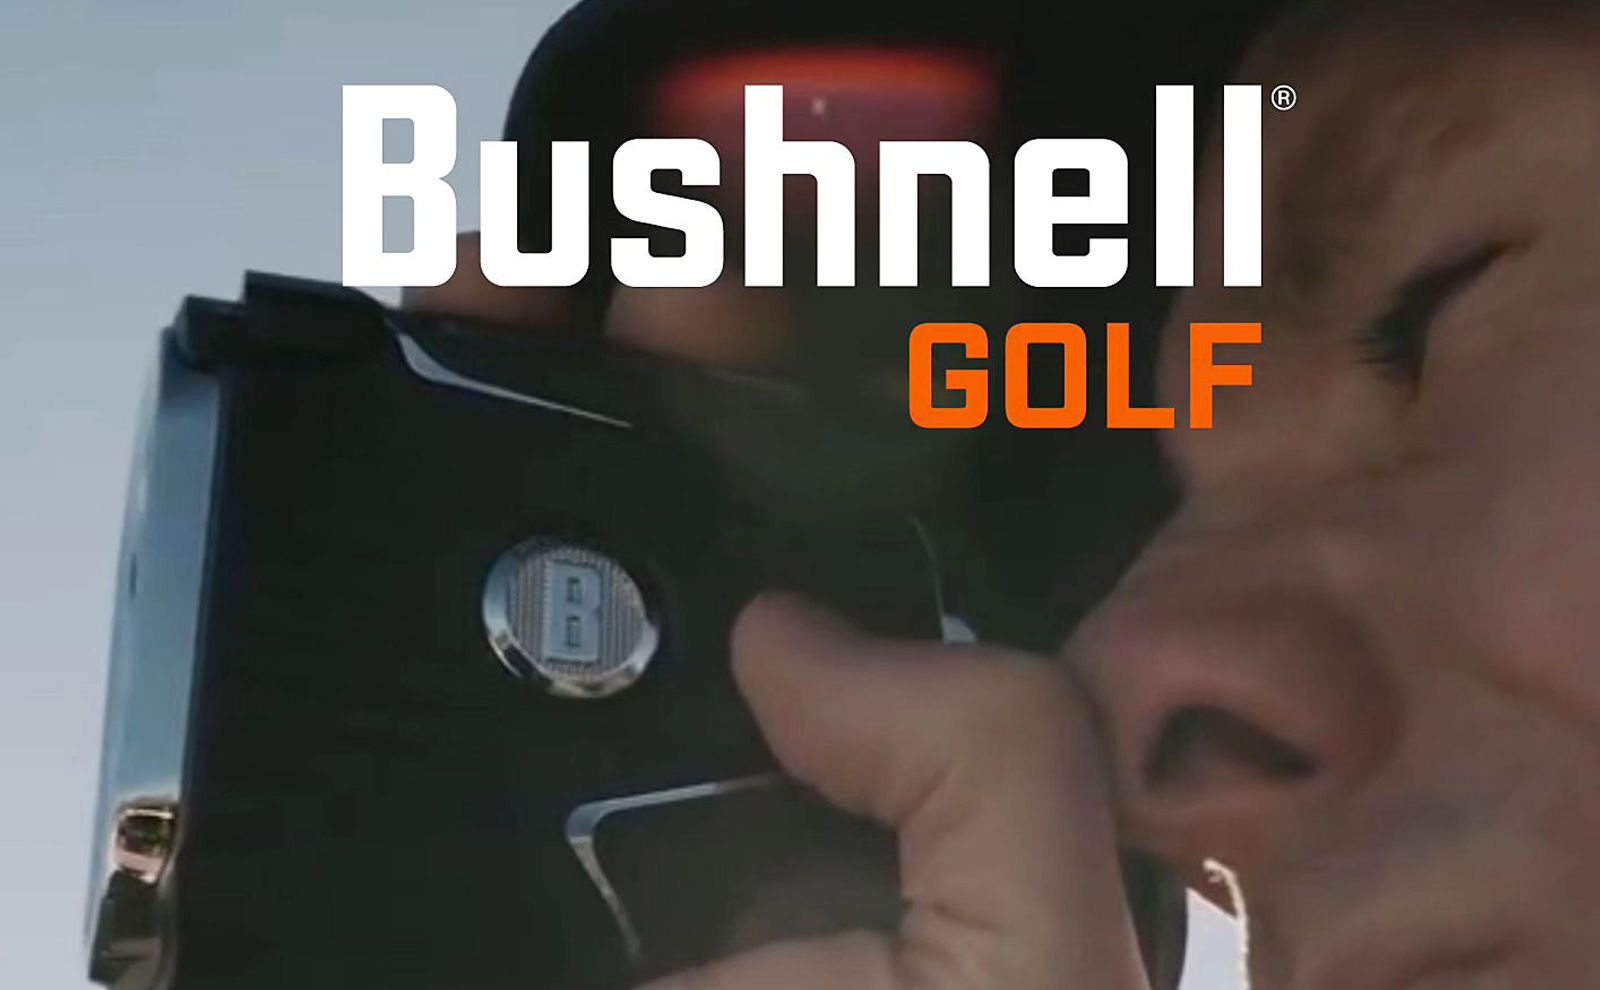 Bushnellgolf - ブッシュネルゴルフ | 距離計 正規通販《GOSSIP GOLF》